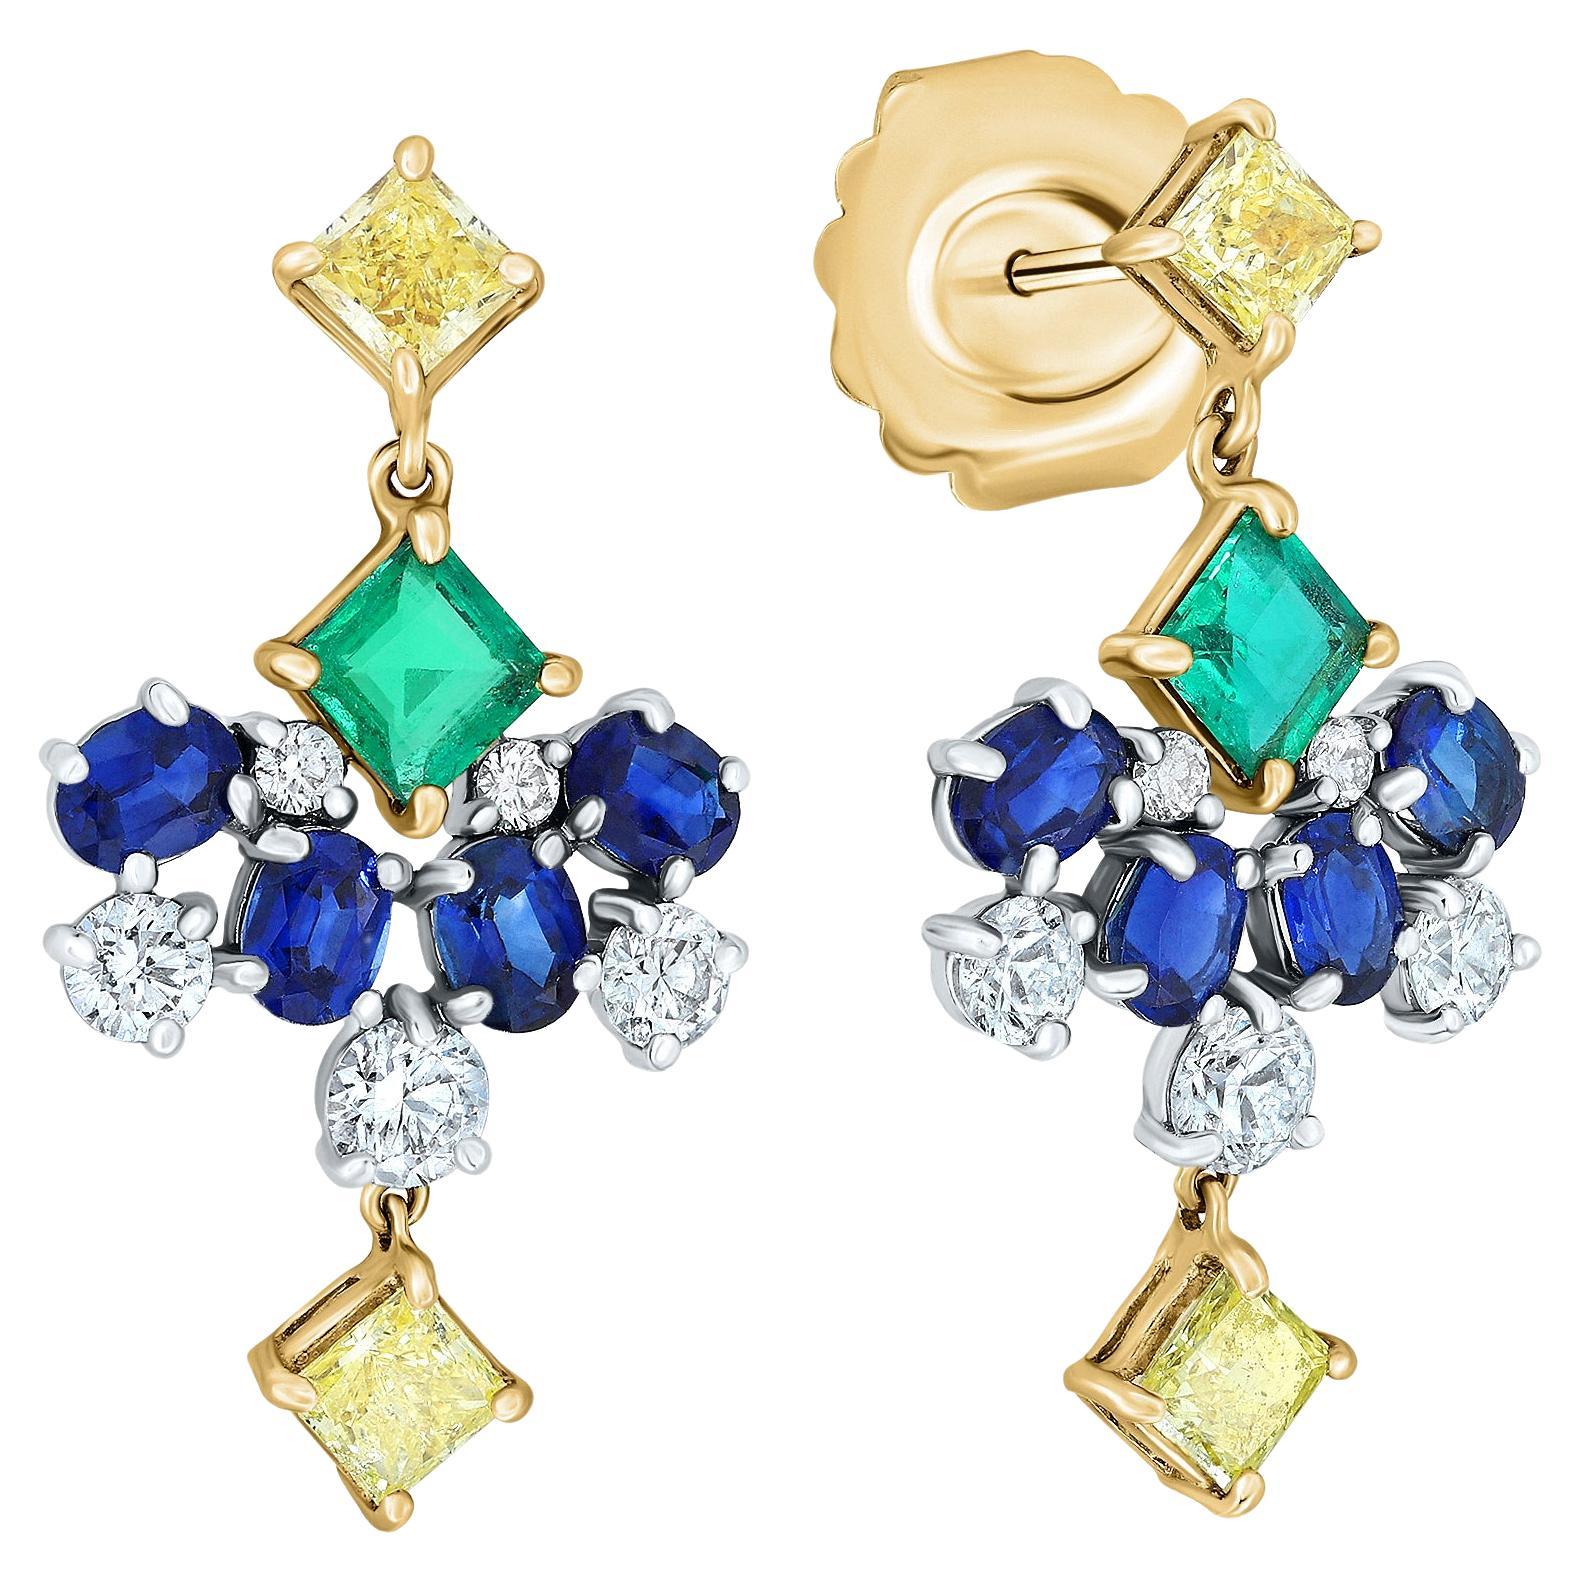 4.5 Carat Yellow Diamond, Sapphire & Emerald Dangle Earrings Platinum 18k Gold. For Sale